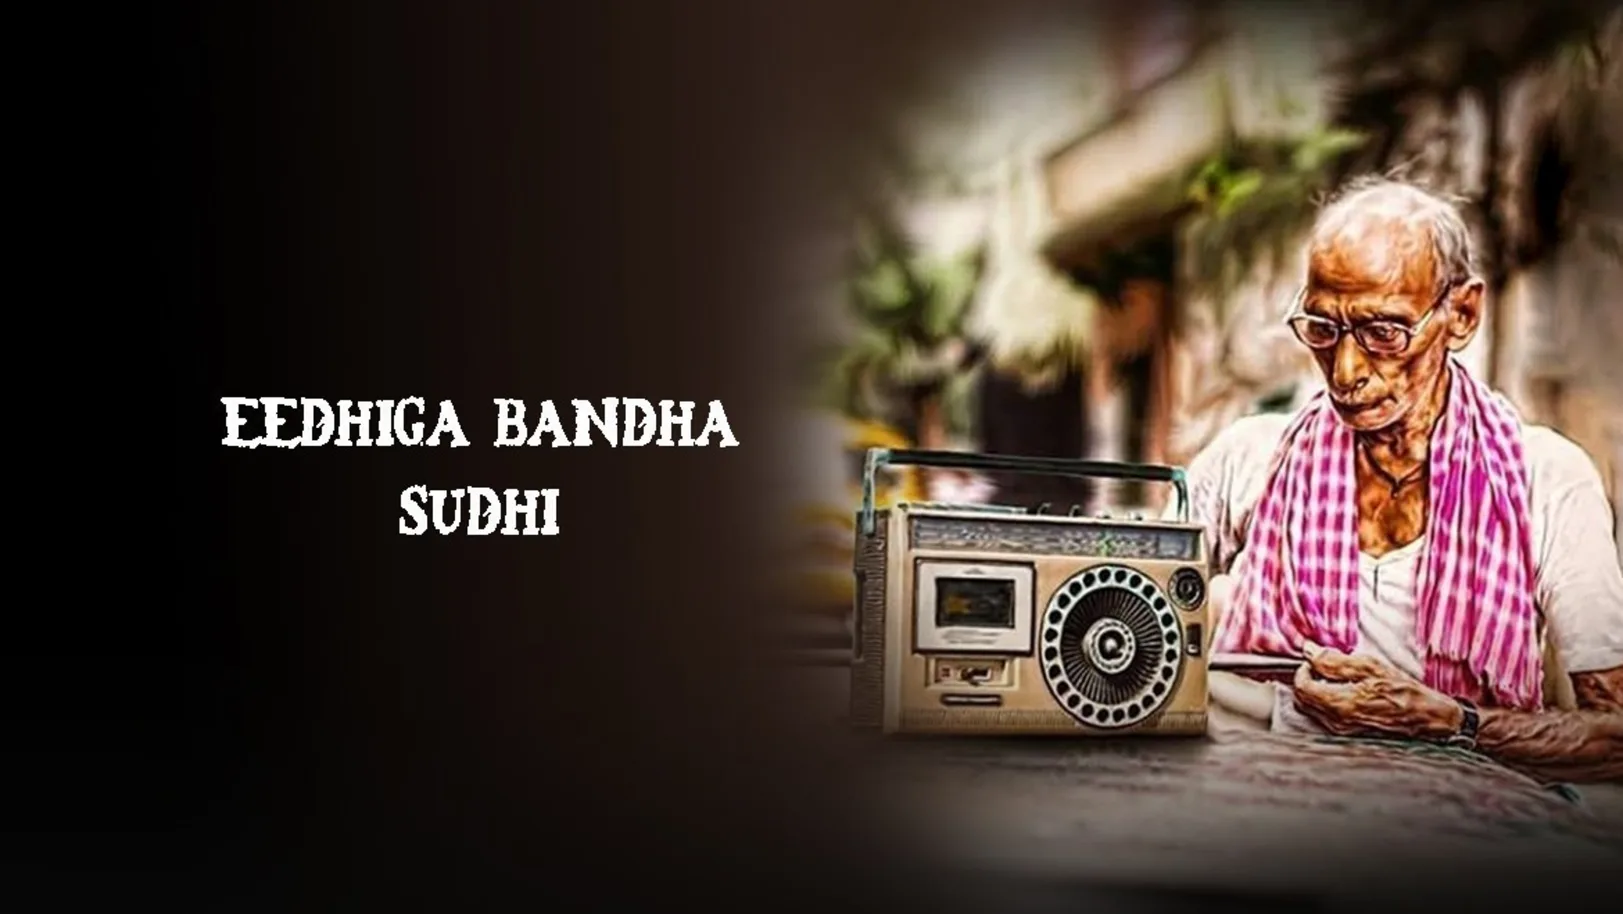 Eedhiga Bandha Sudhi Movie